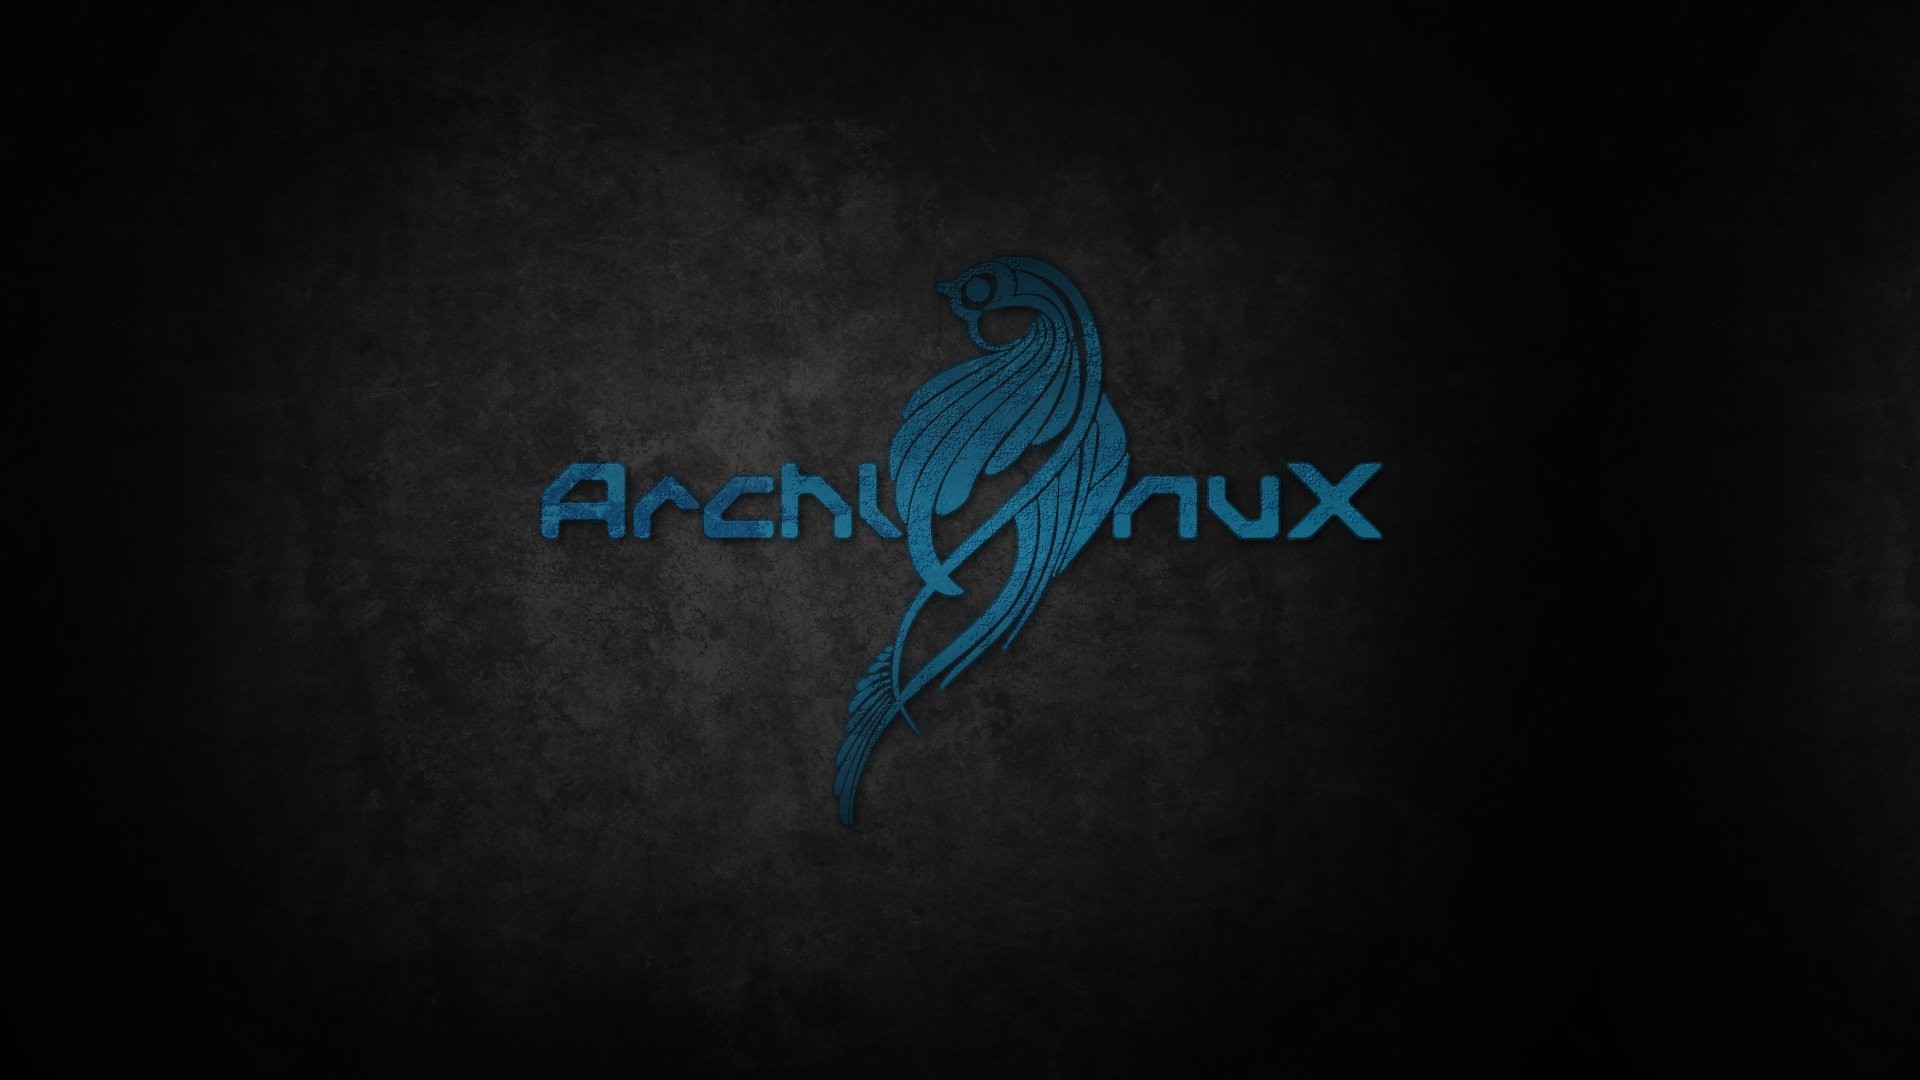 Linux, Arch Linux Wallpaper